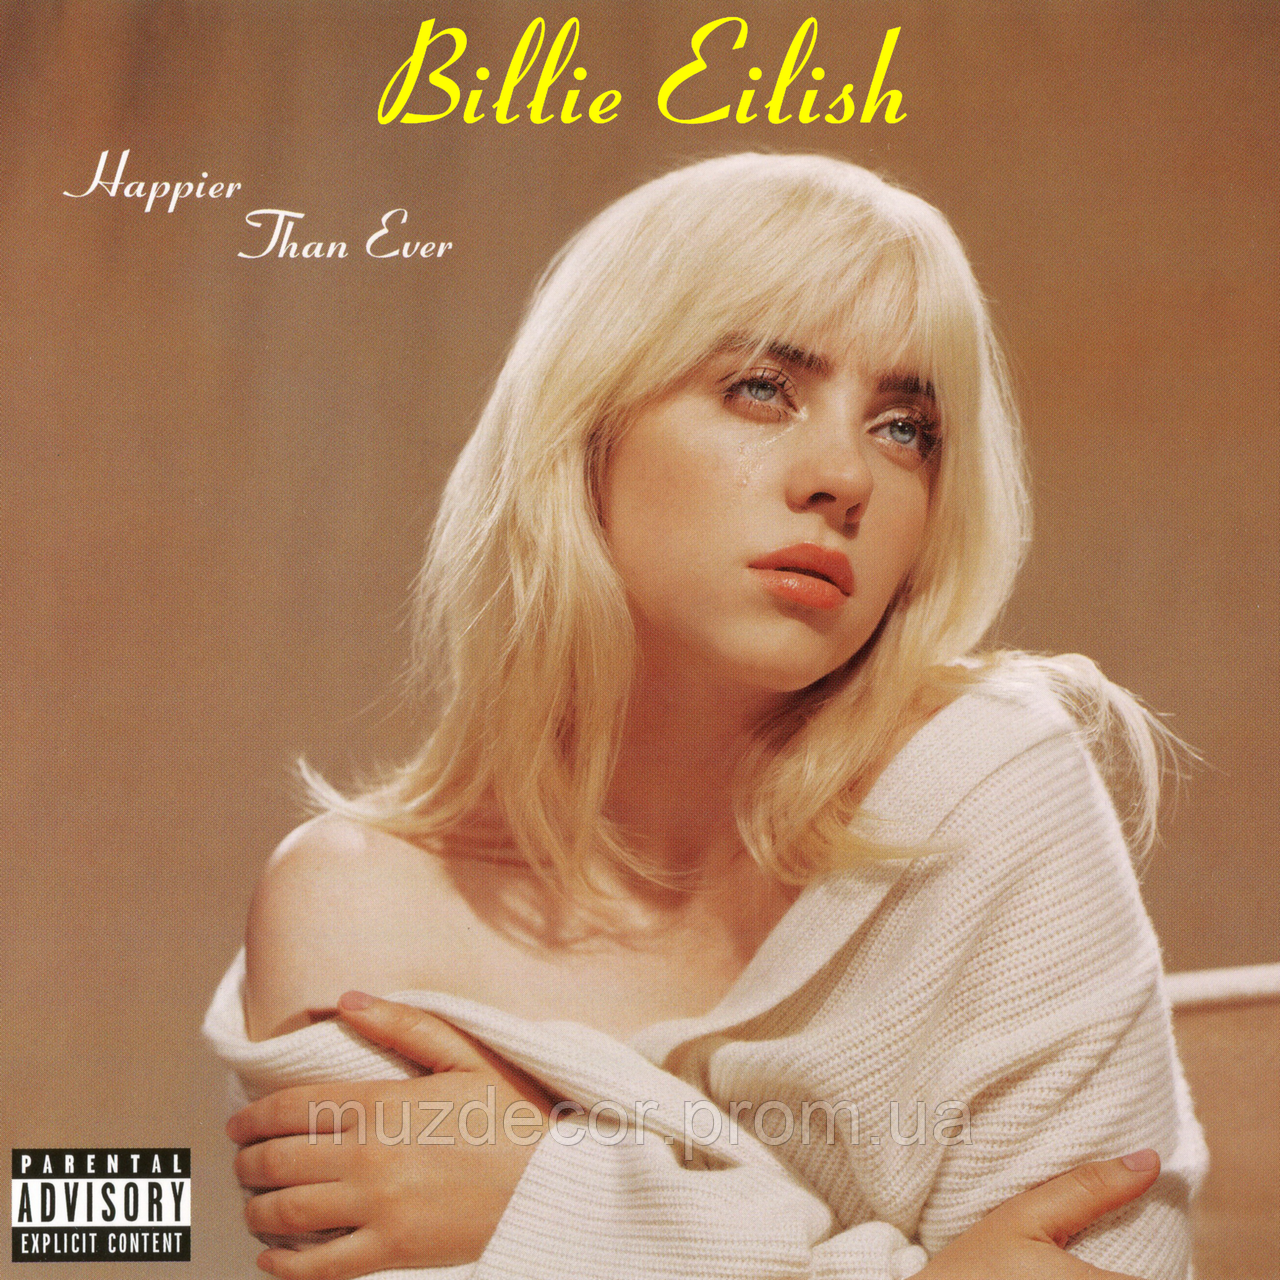 Billie Eilish - Happier Than Ever, 2021, AUDIO, CD (cd-r)